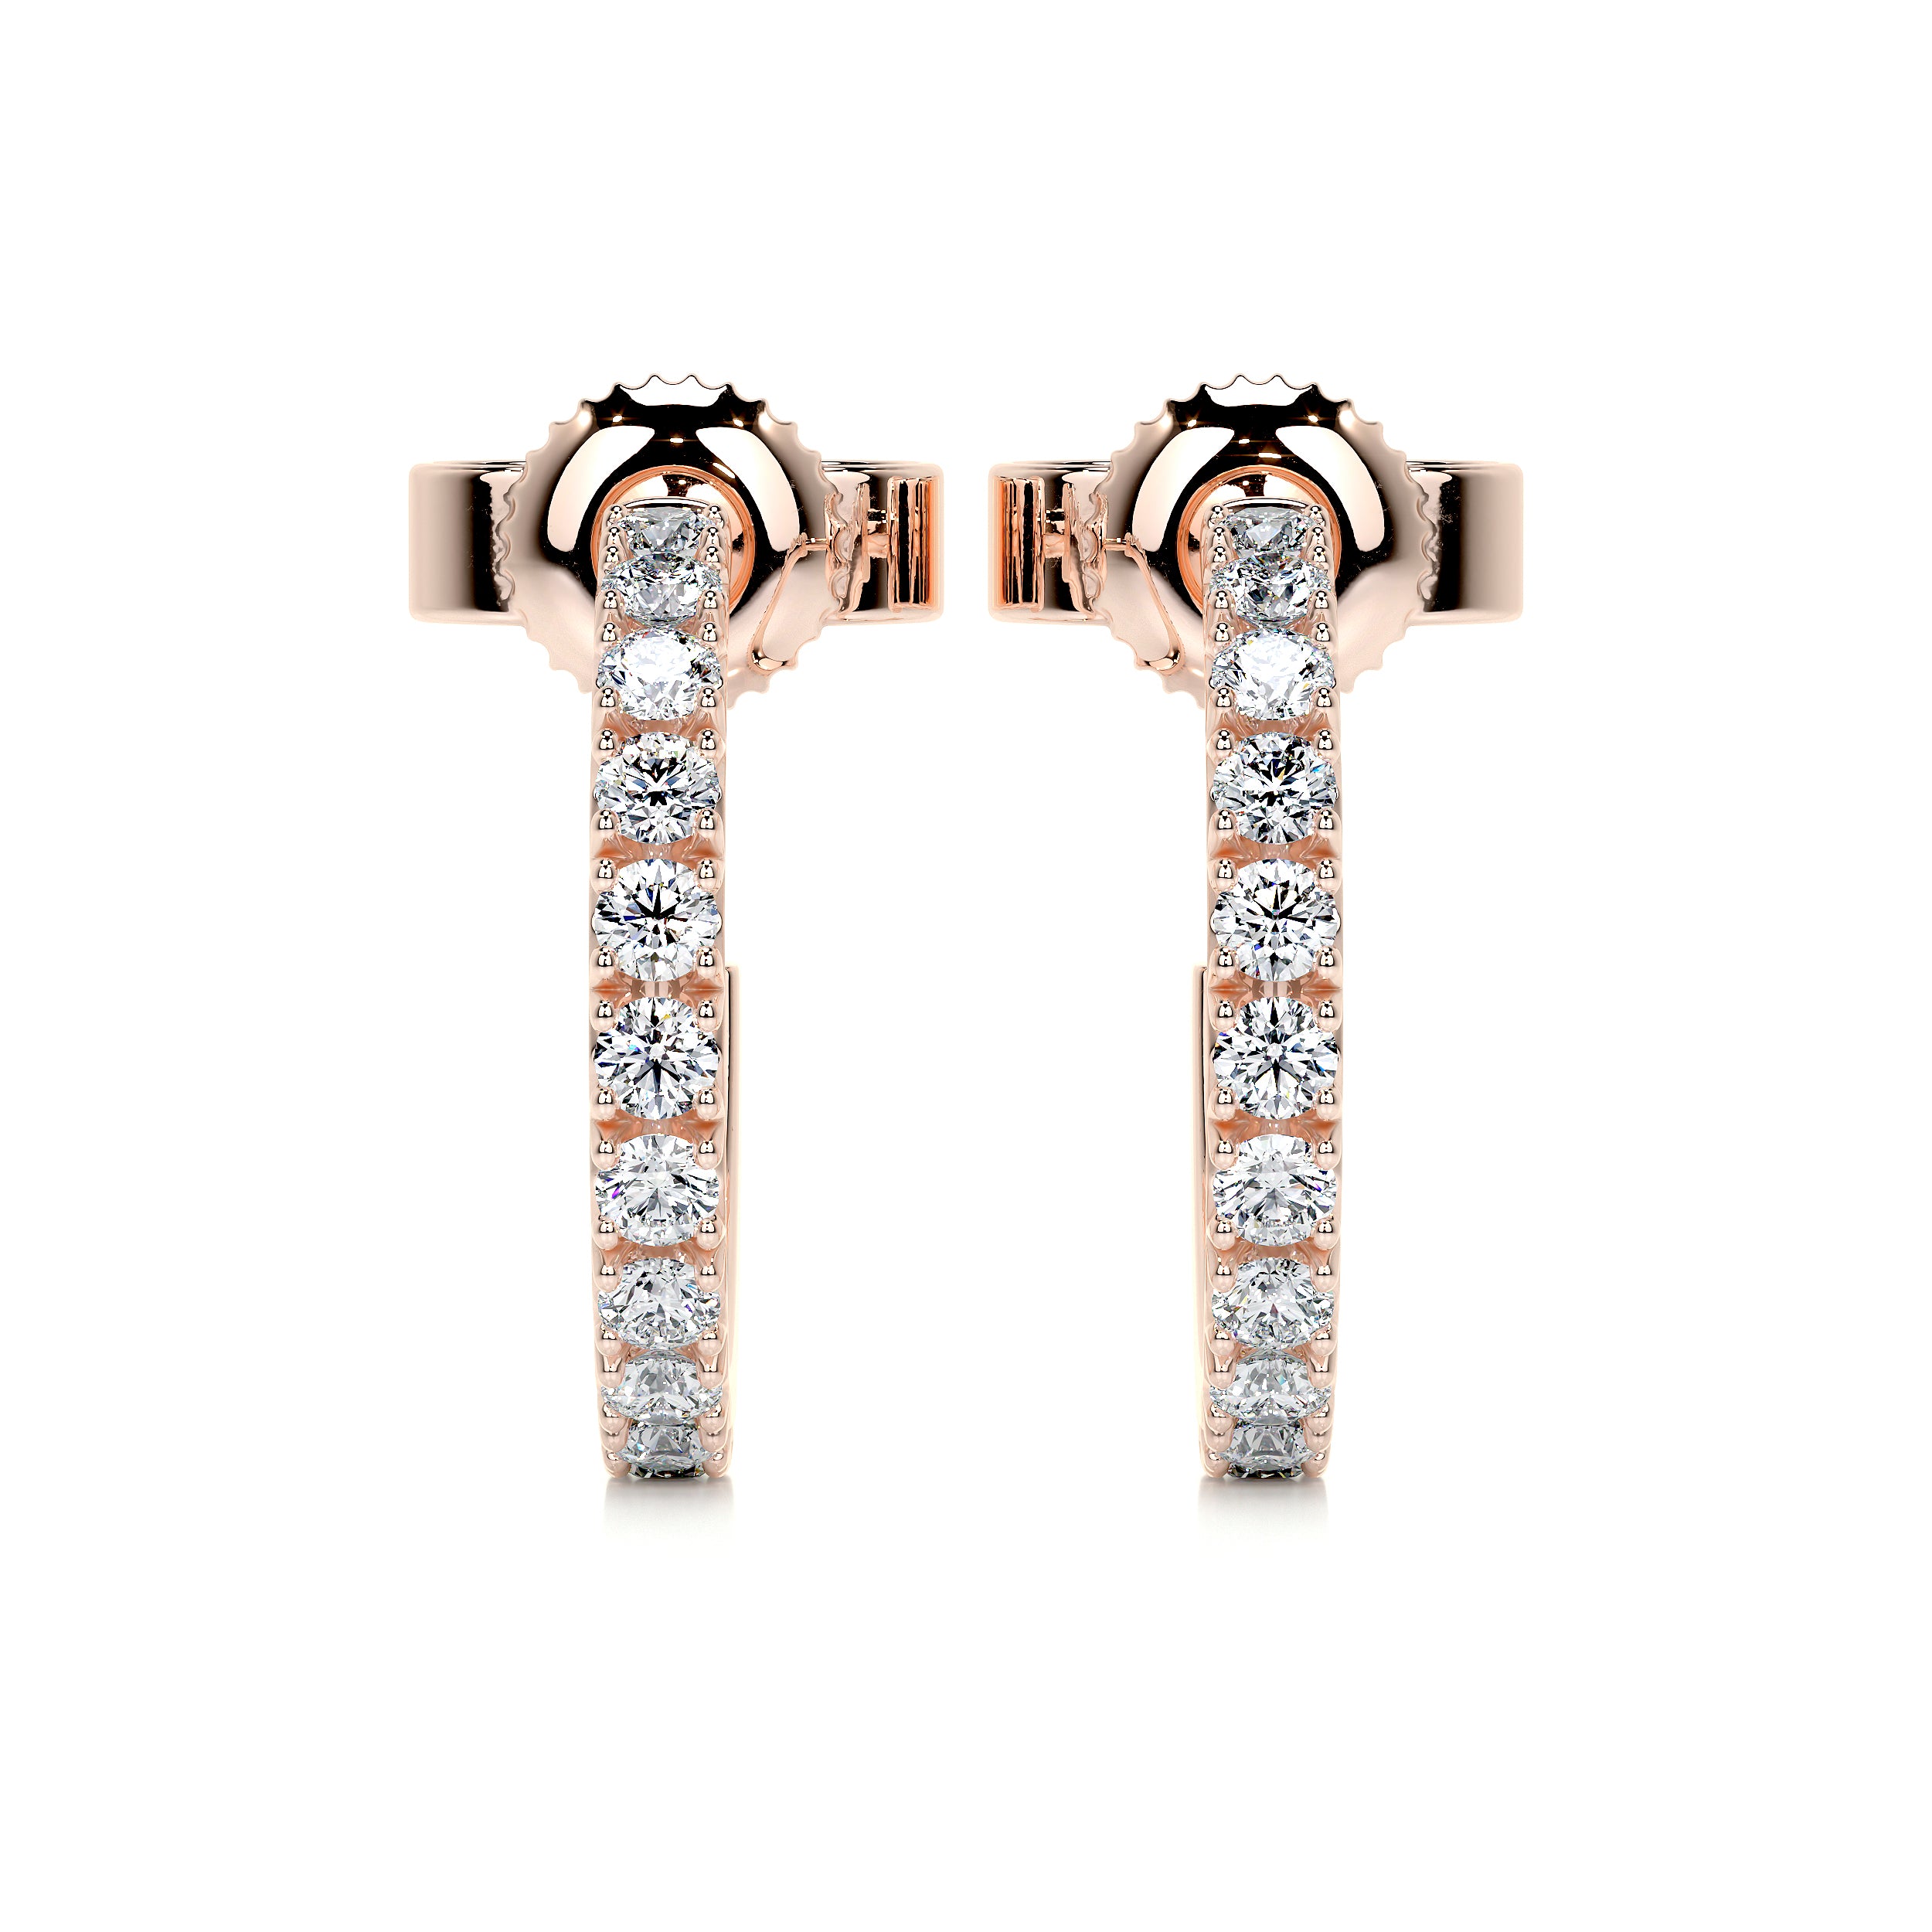 Nicole Diamond Earrings   (2.5 Carat) -14K Rose Gold